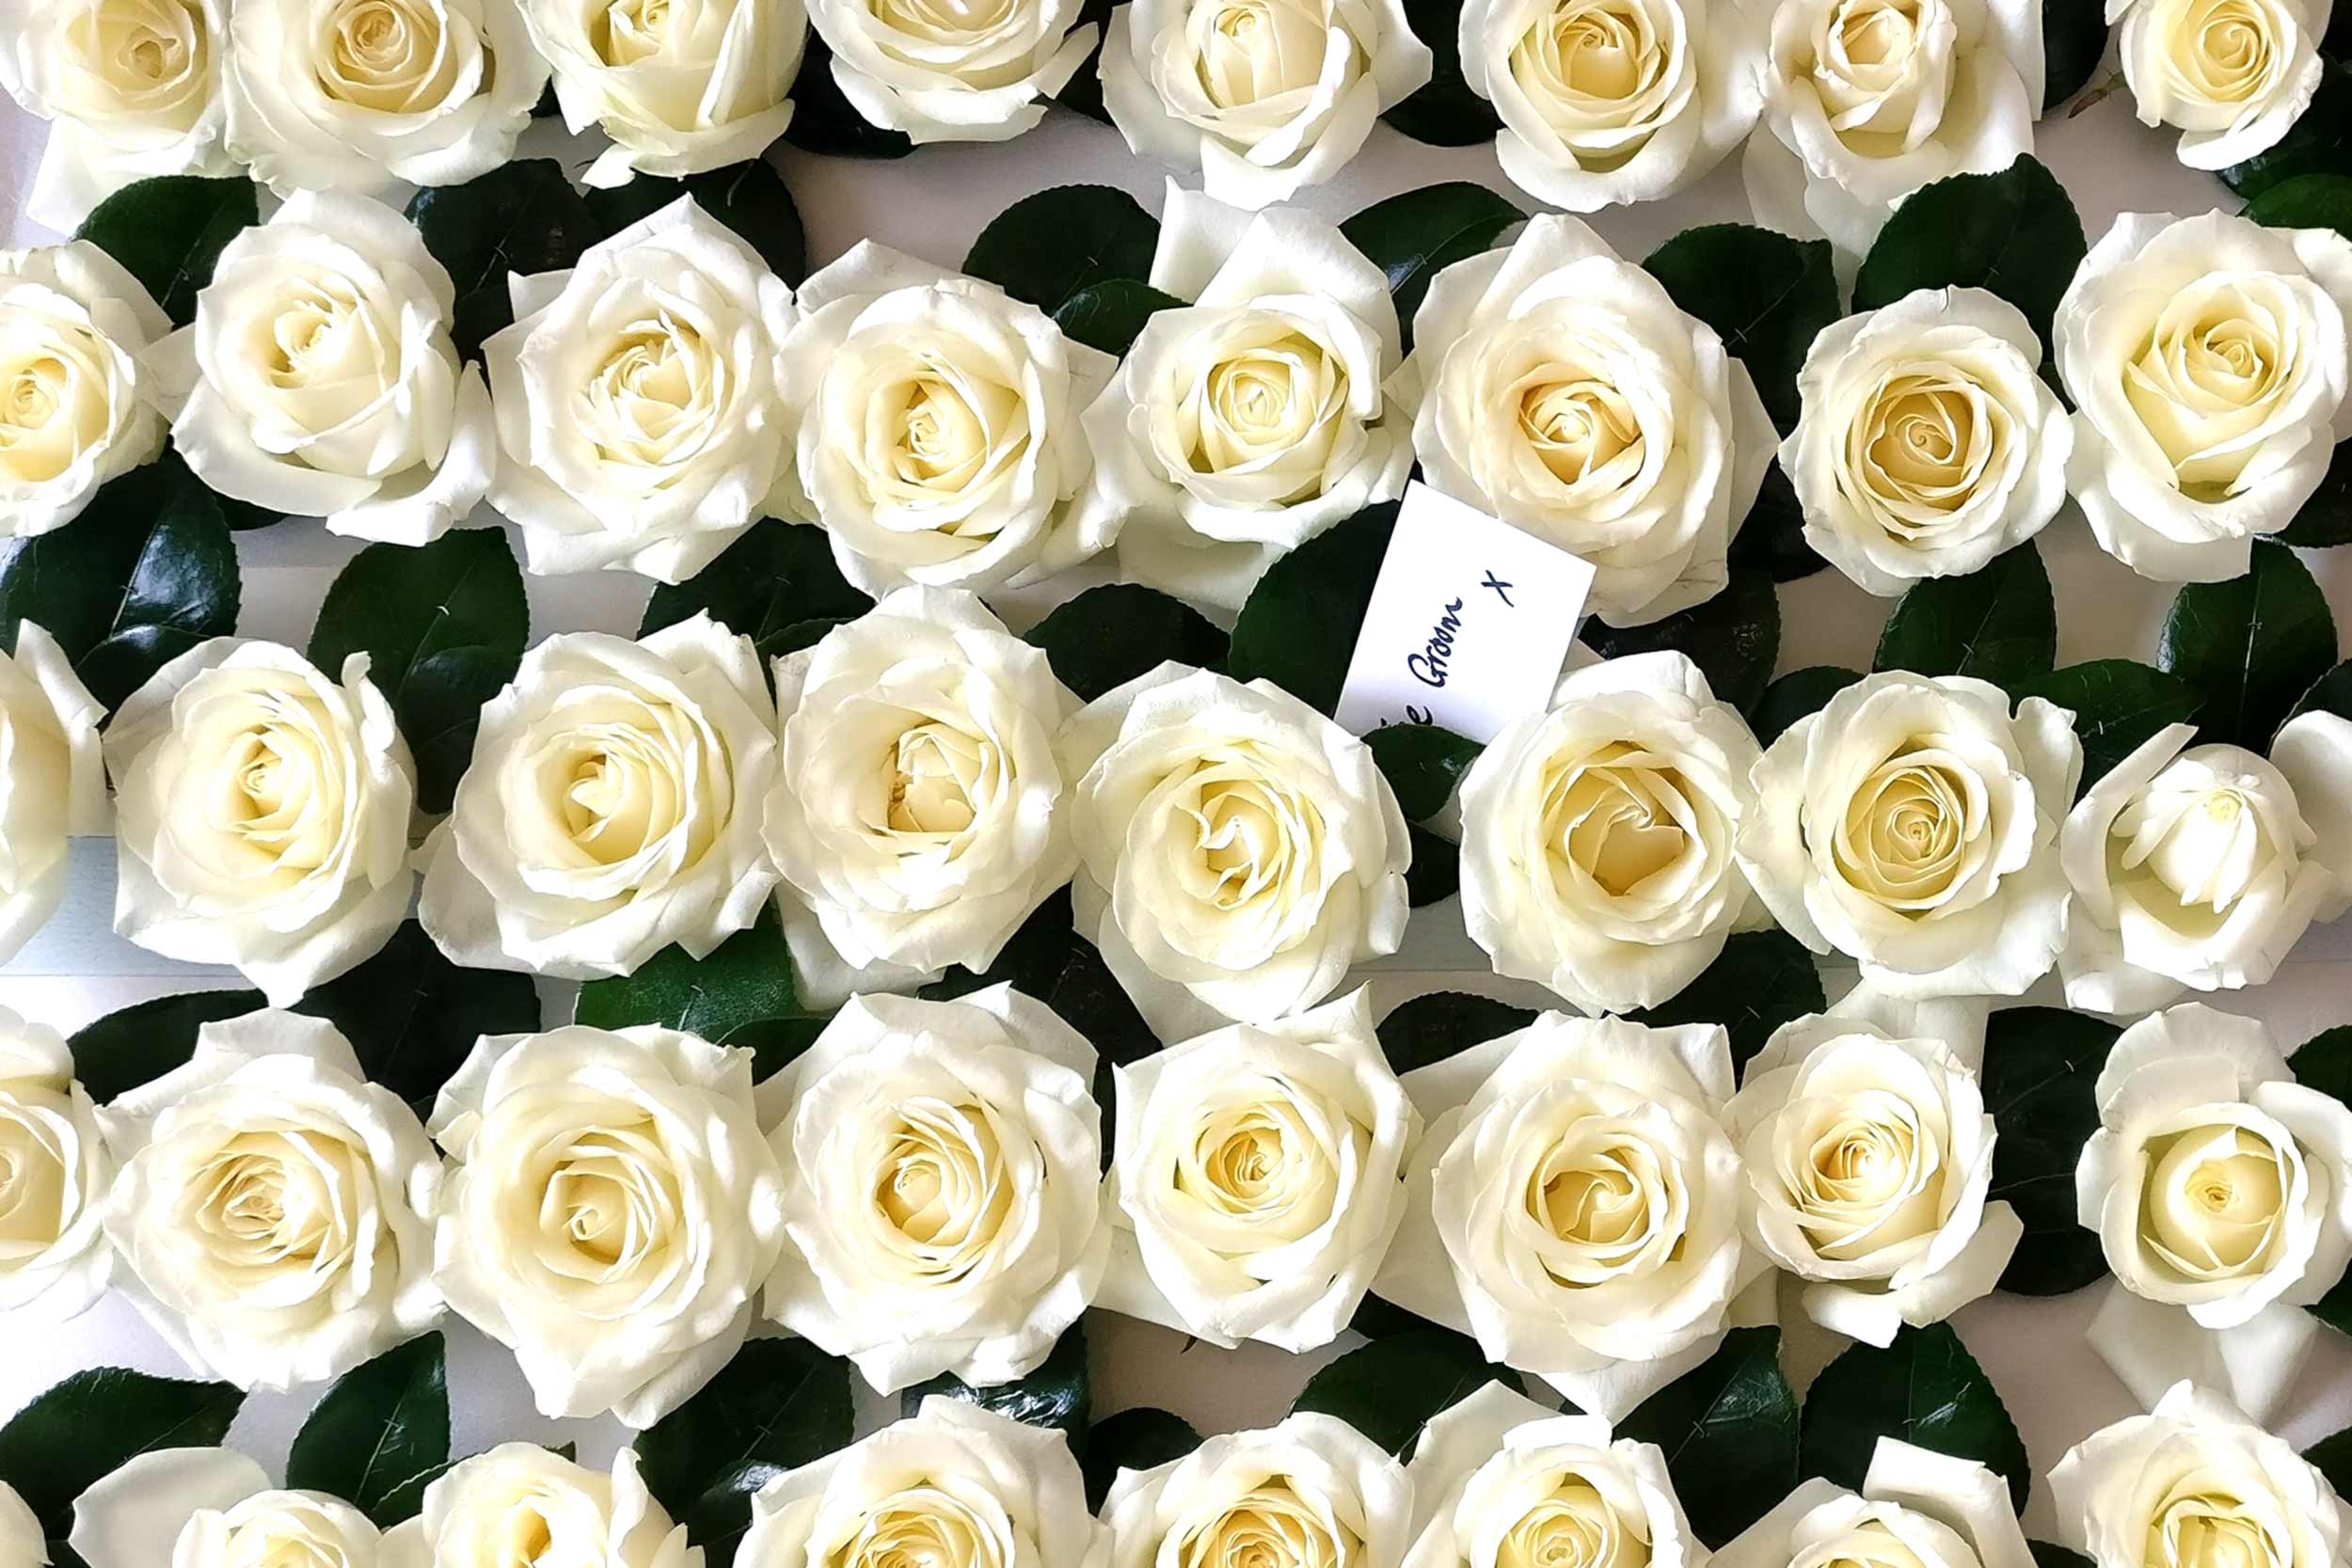 Oadby florist, Wigston Florist, Leicester florist, multiple white rose wedding Buttonholes laid out symmetrically